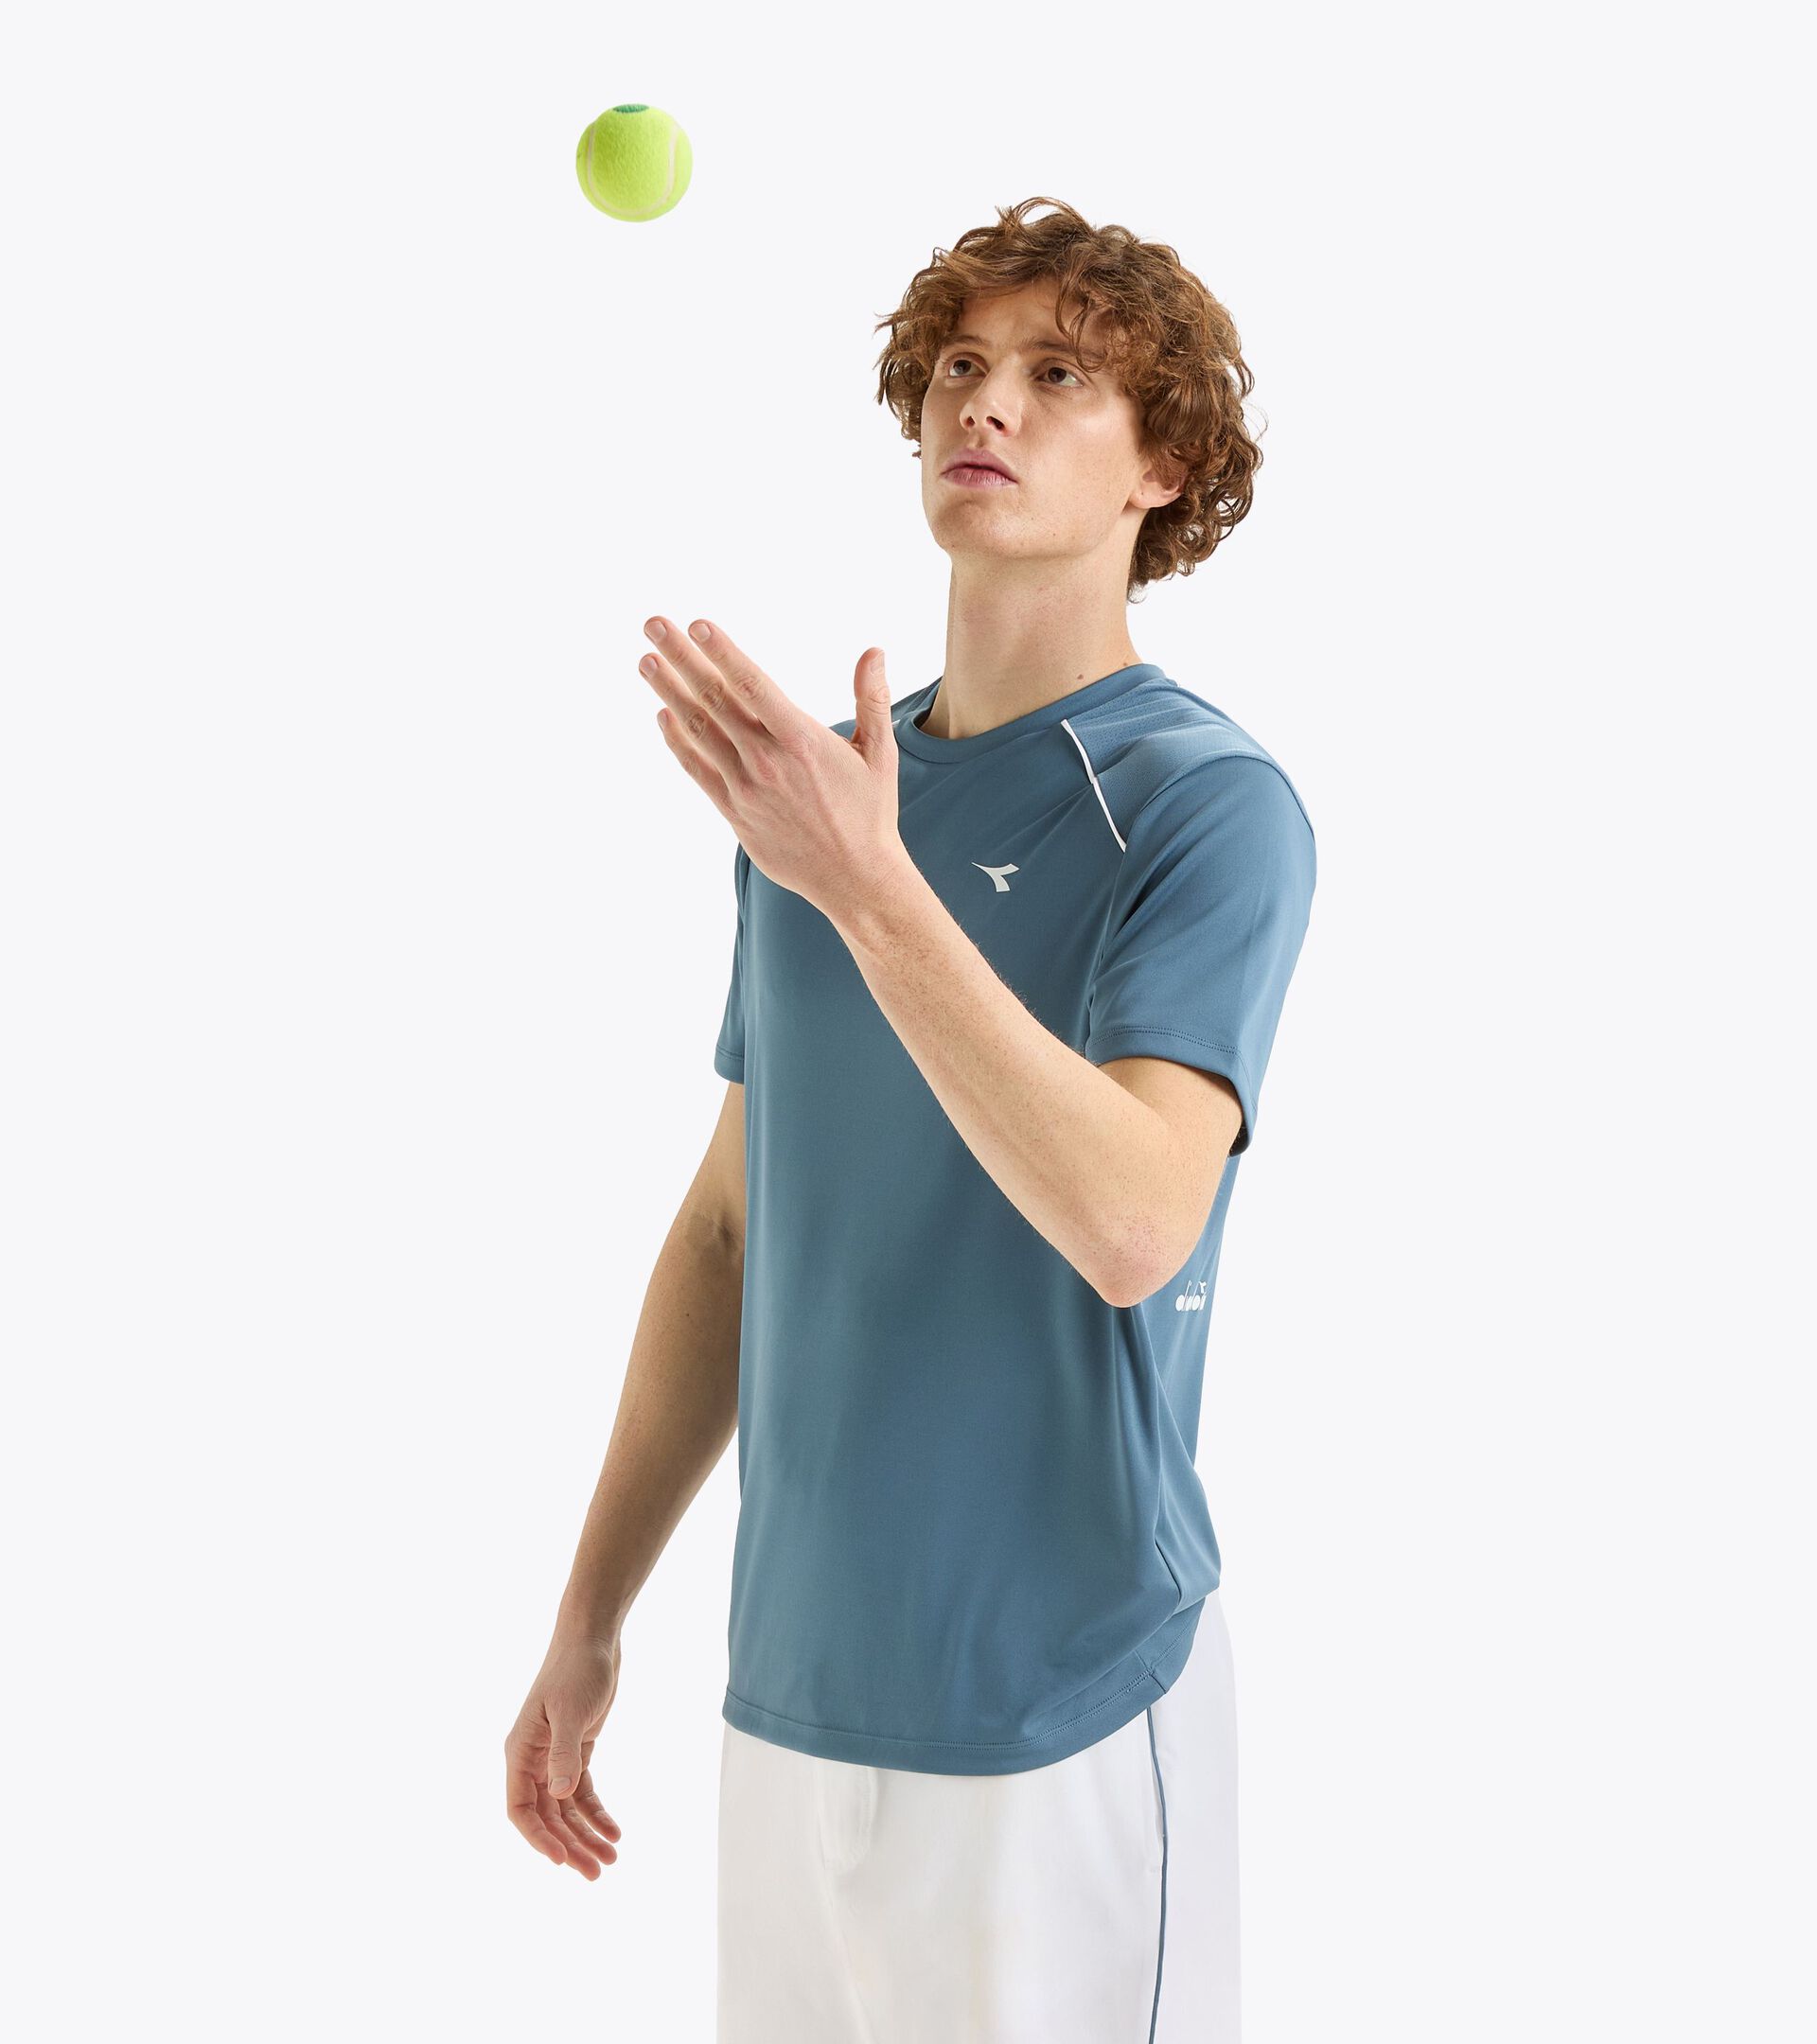 Camiseta de tenis - Hombre SS T-SHIRT CORE OCEANVIEW - Diadora